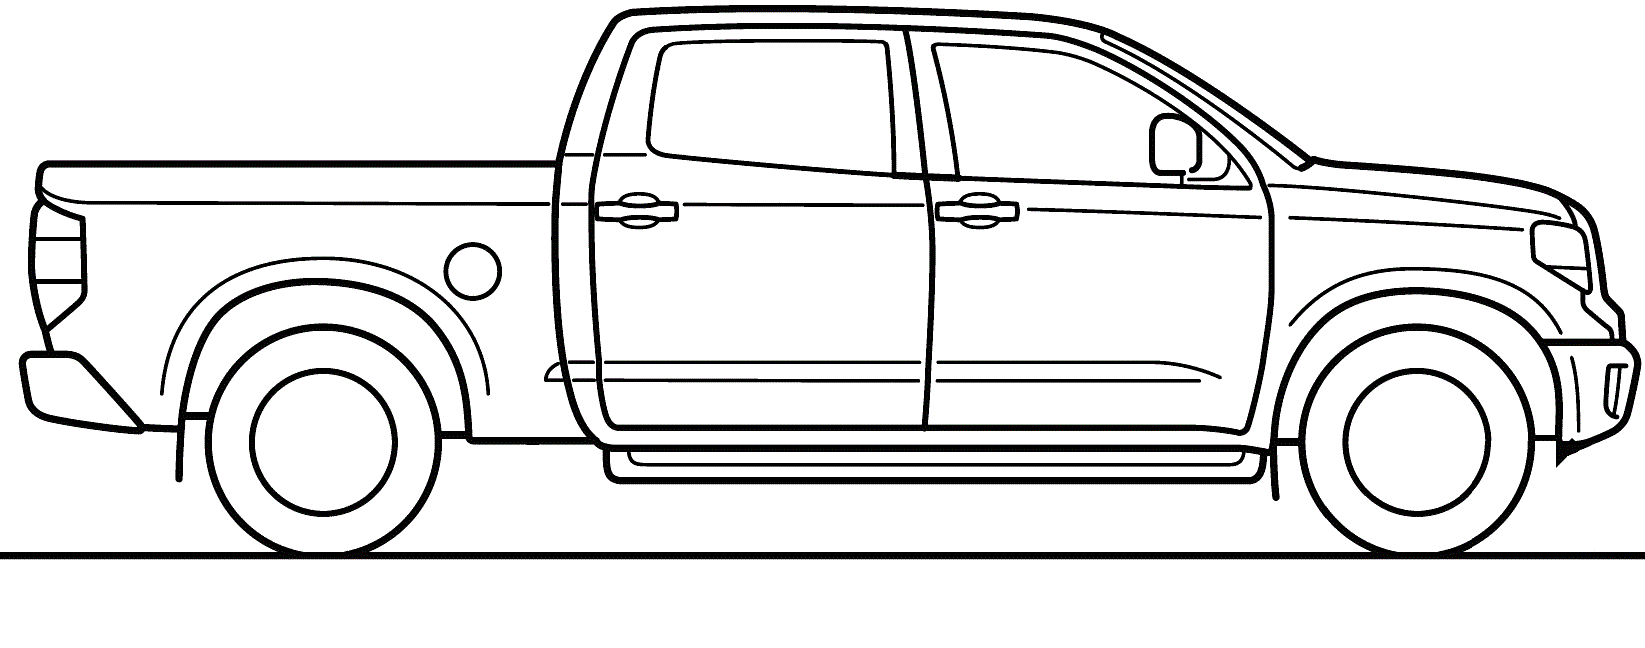 blueprint of a pickup